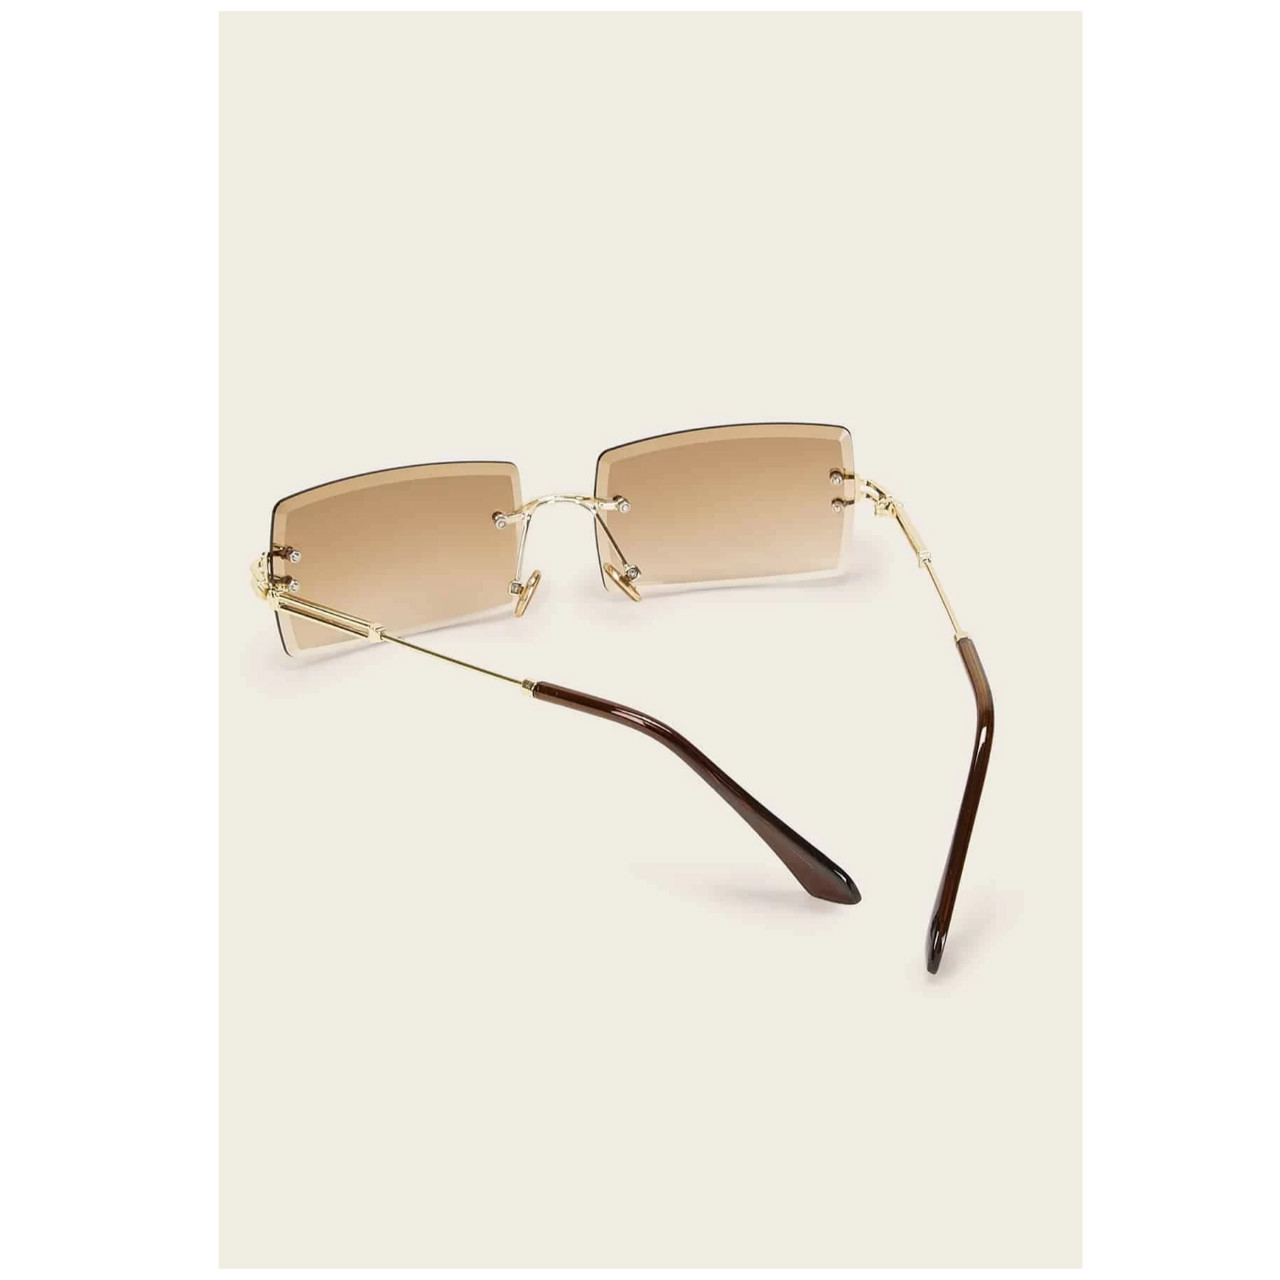 Rimless square frame sunglasses gradient brown